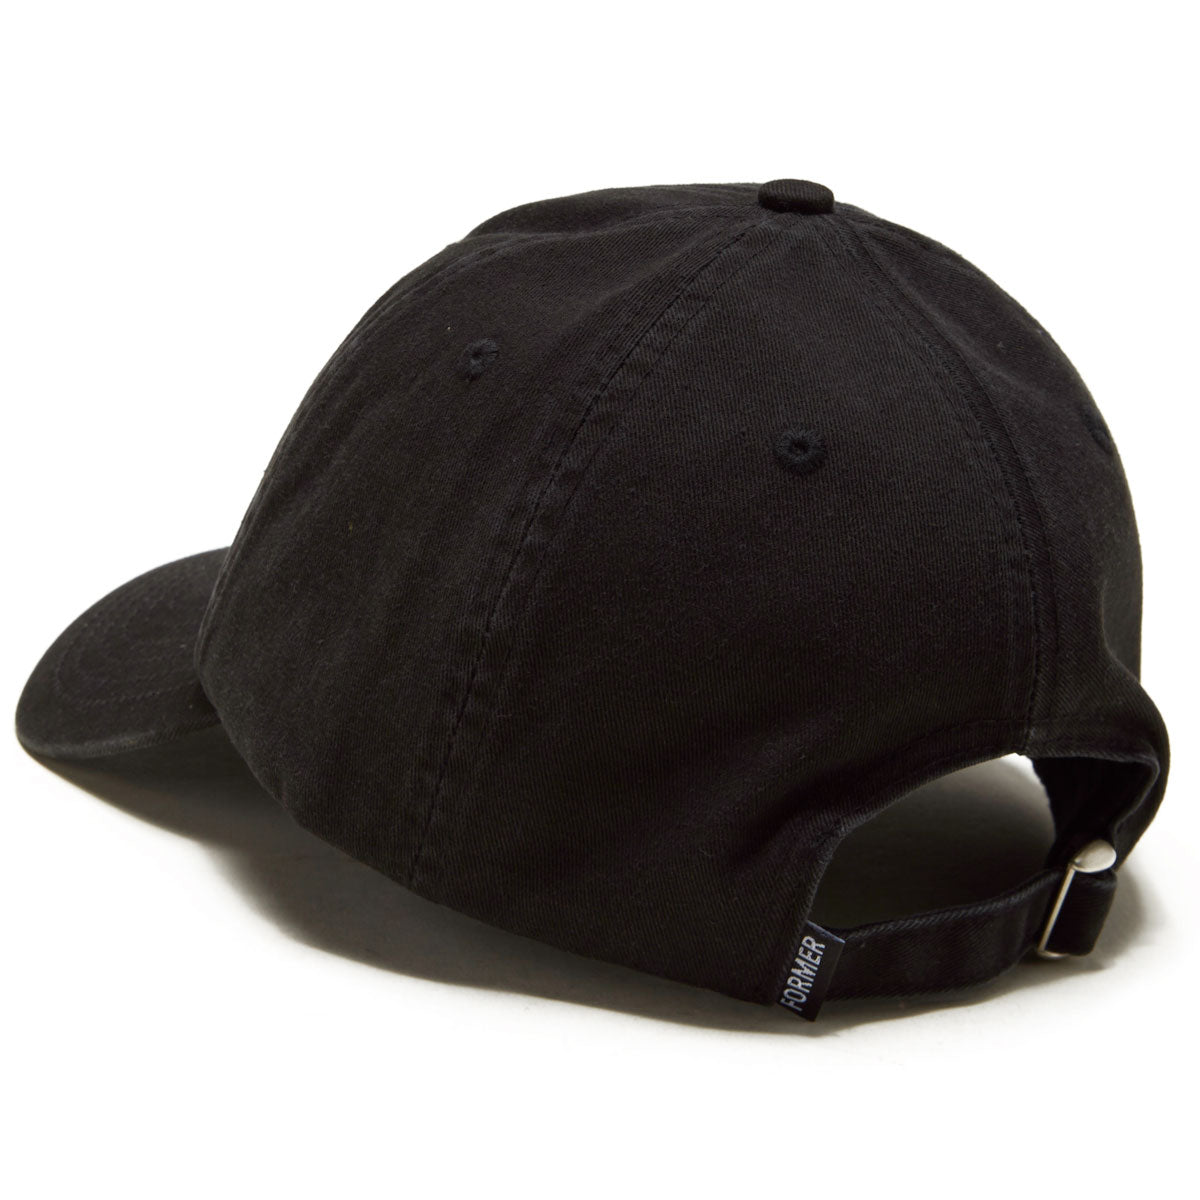 Former Complexion Hat - Black image 2